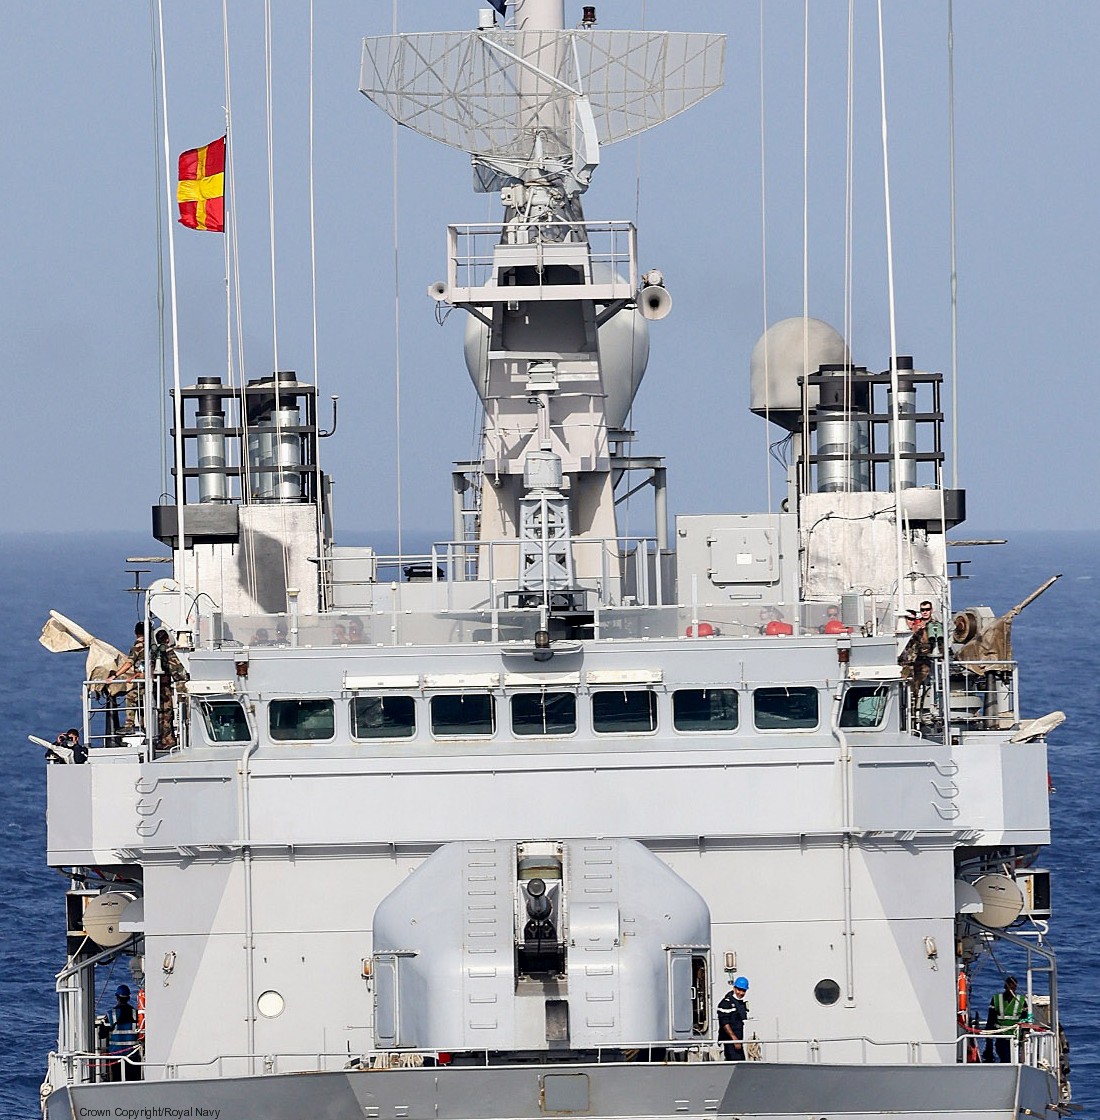 f-735 fs germinal floreal class frigate french navy marine nationale fregate de surveillance 15a 100mm gun